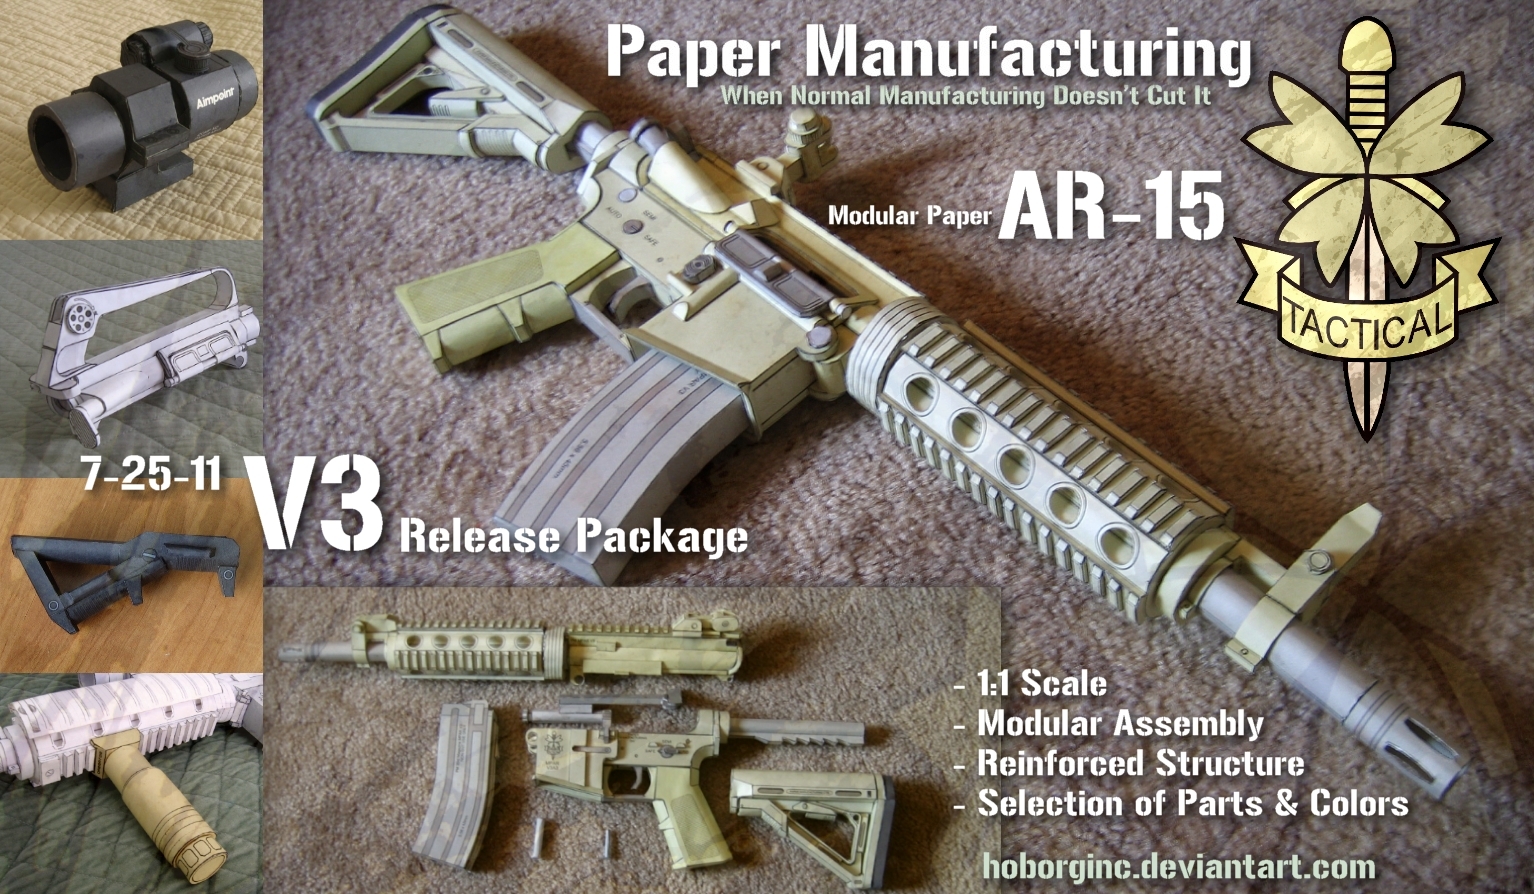 Paper Manufacturing2 - Paper Manufacturing AR-15 V3.jpg